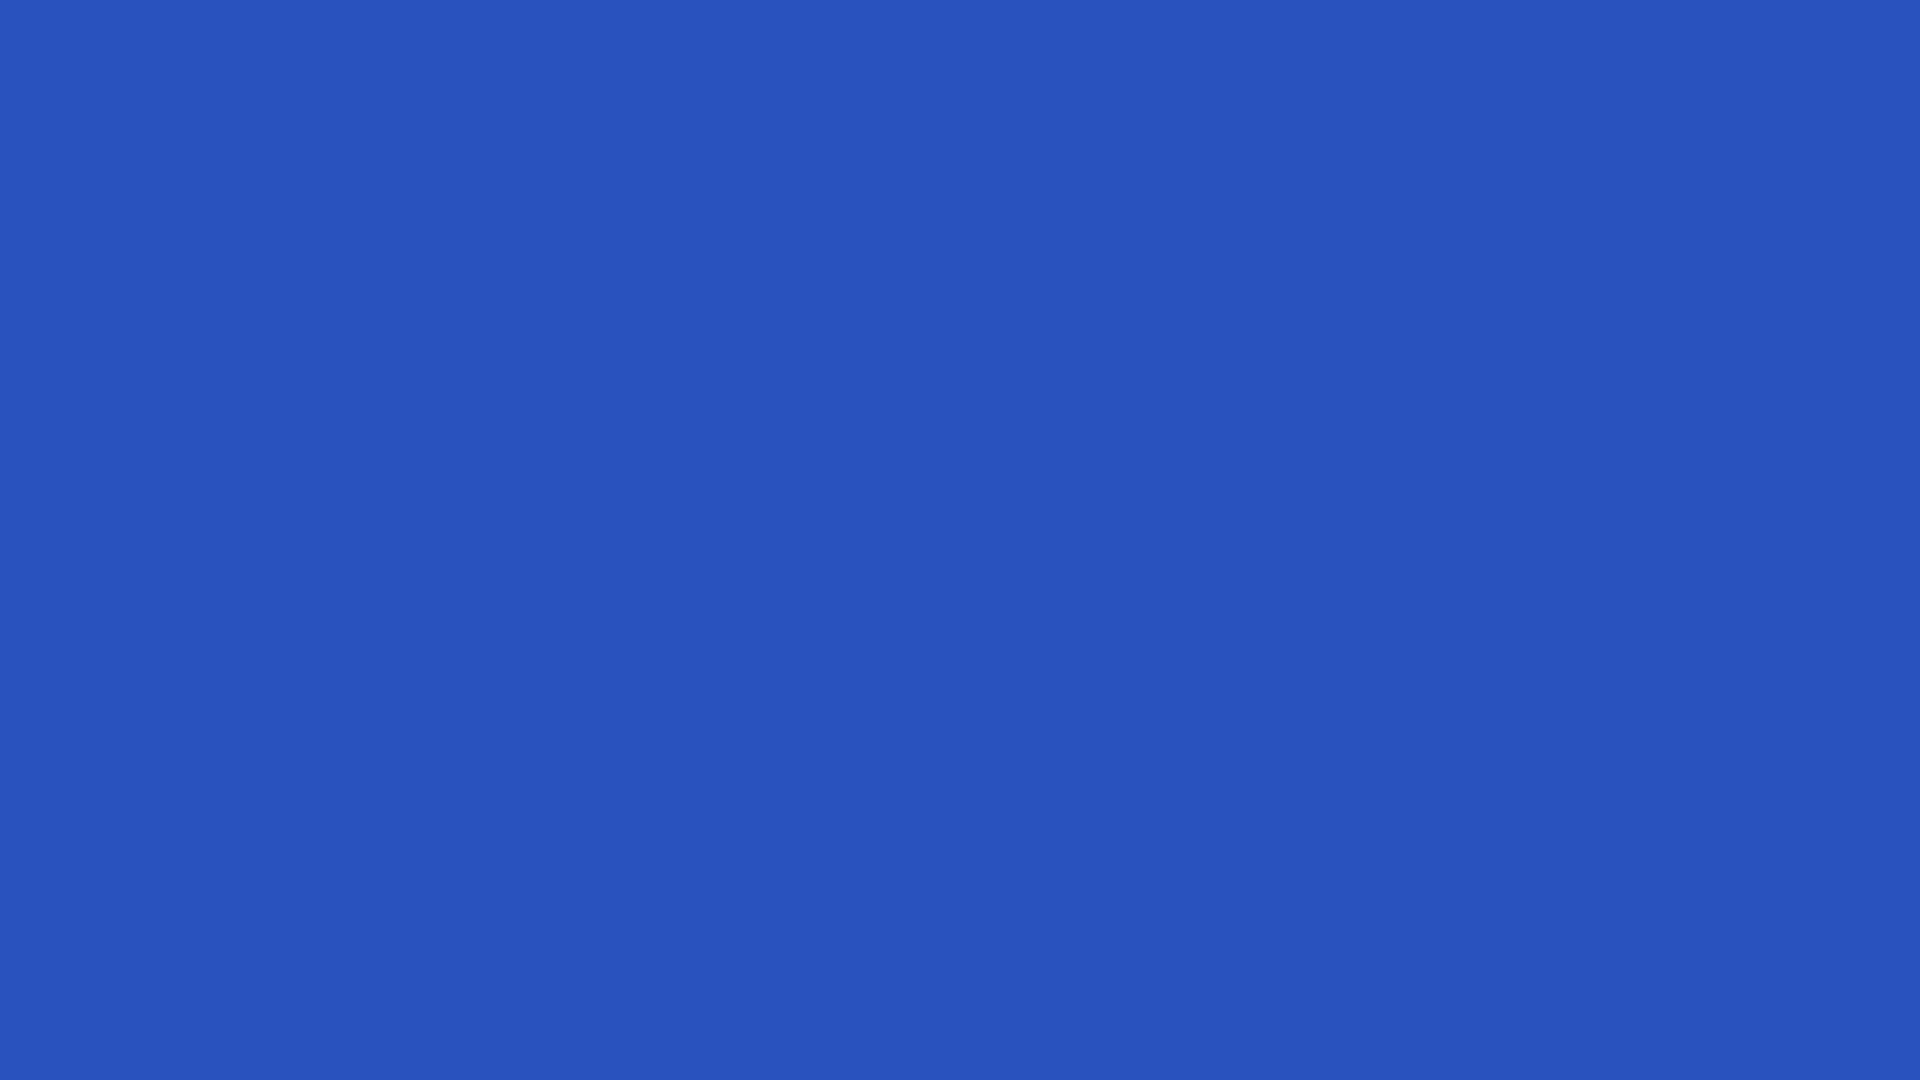 1920x1080 cerulean blue solid color wallpaper